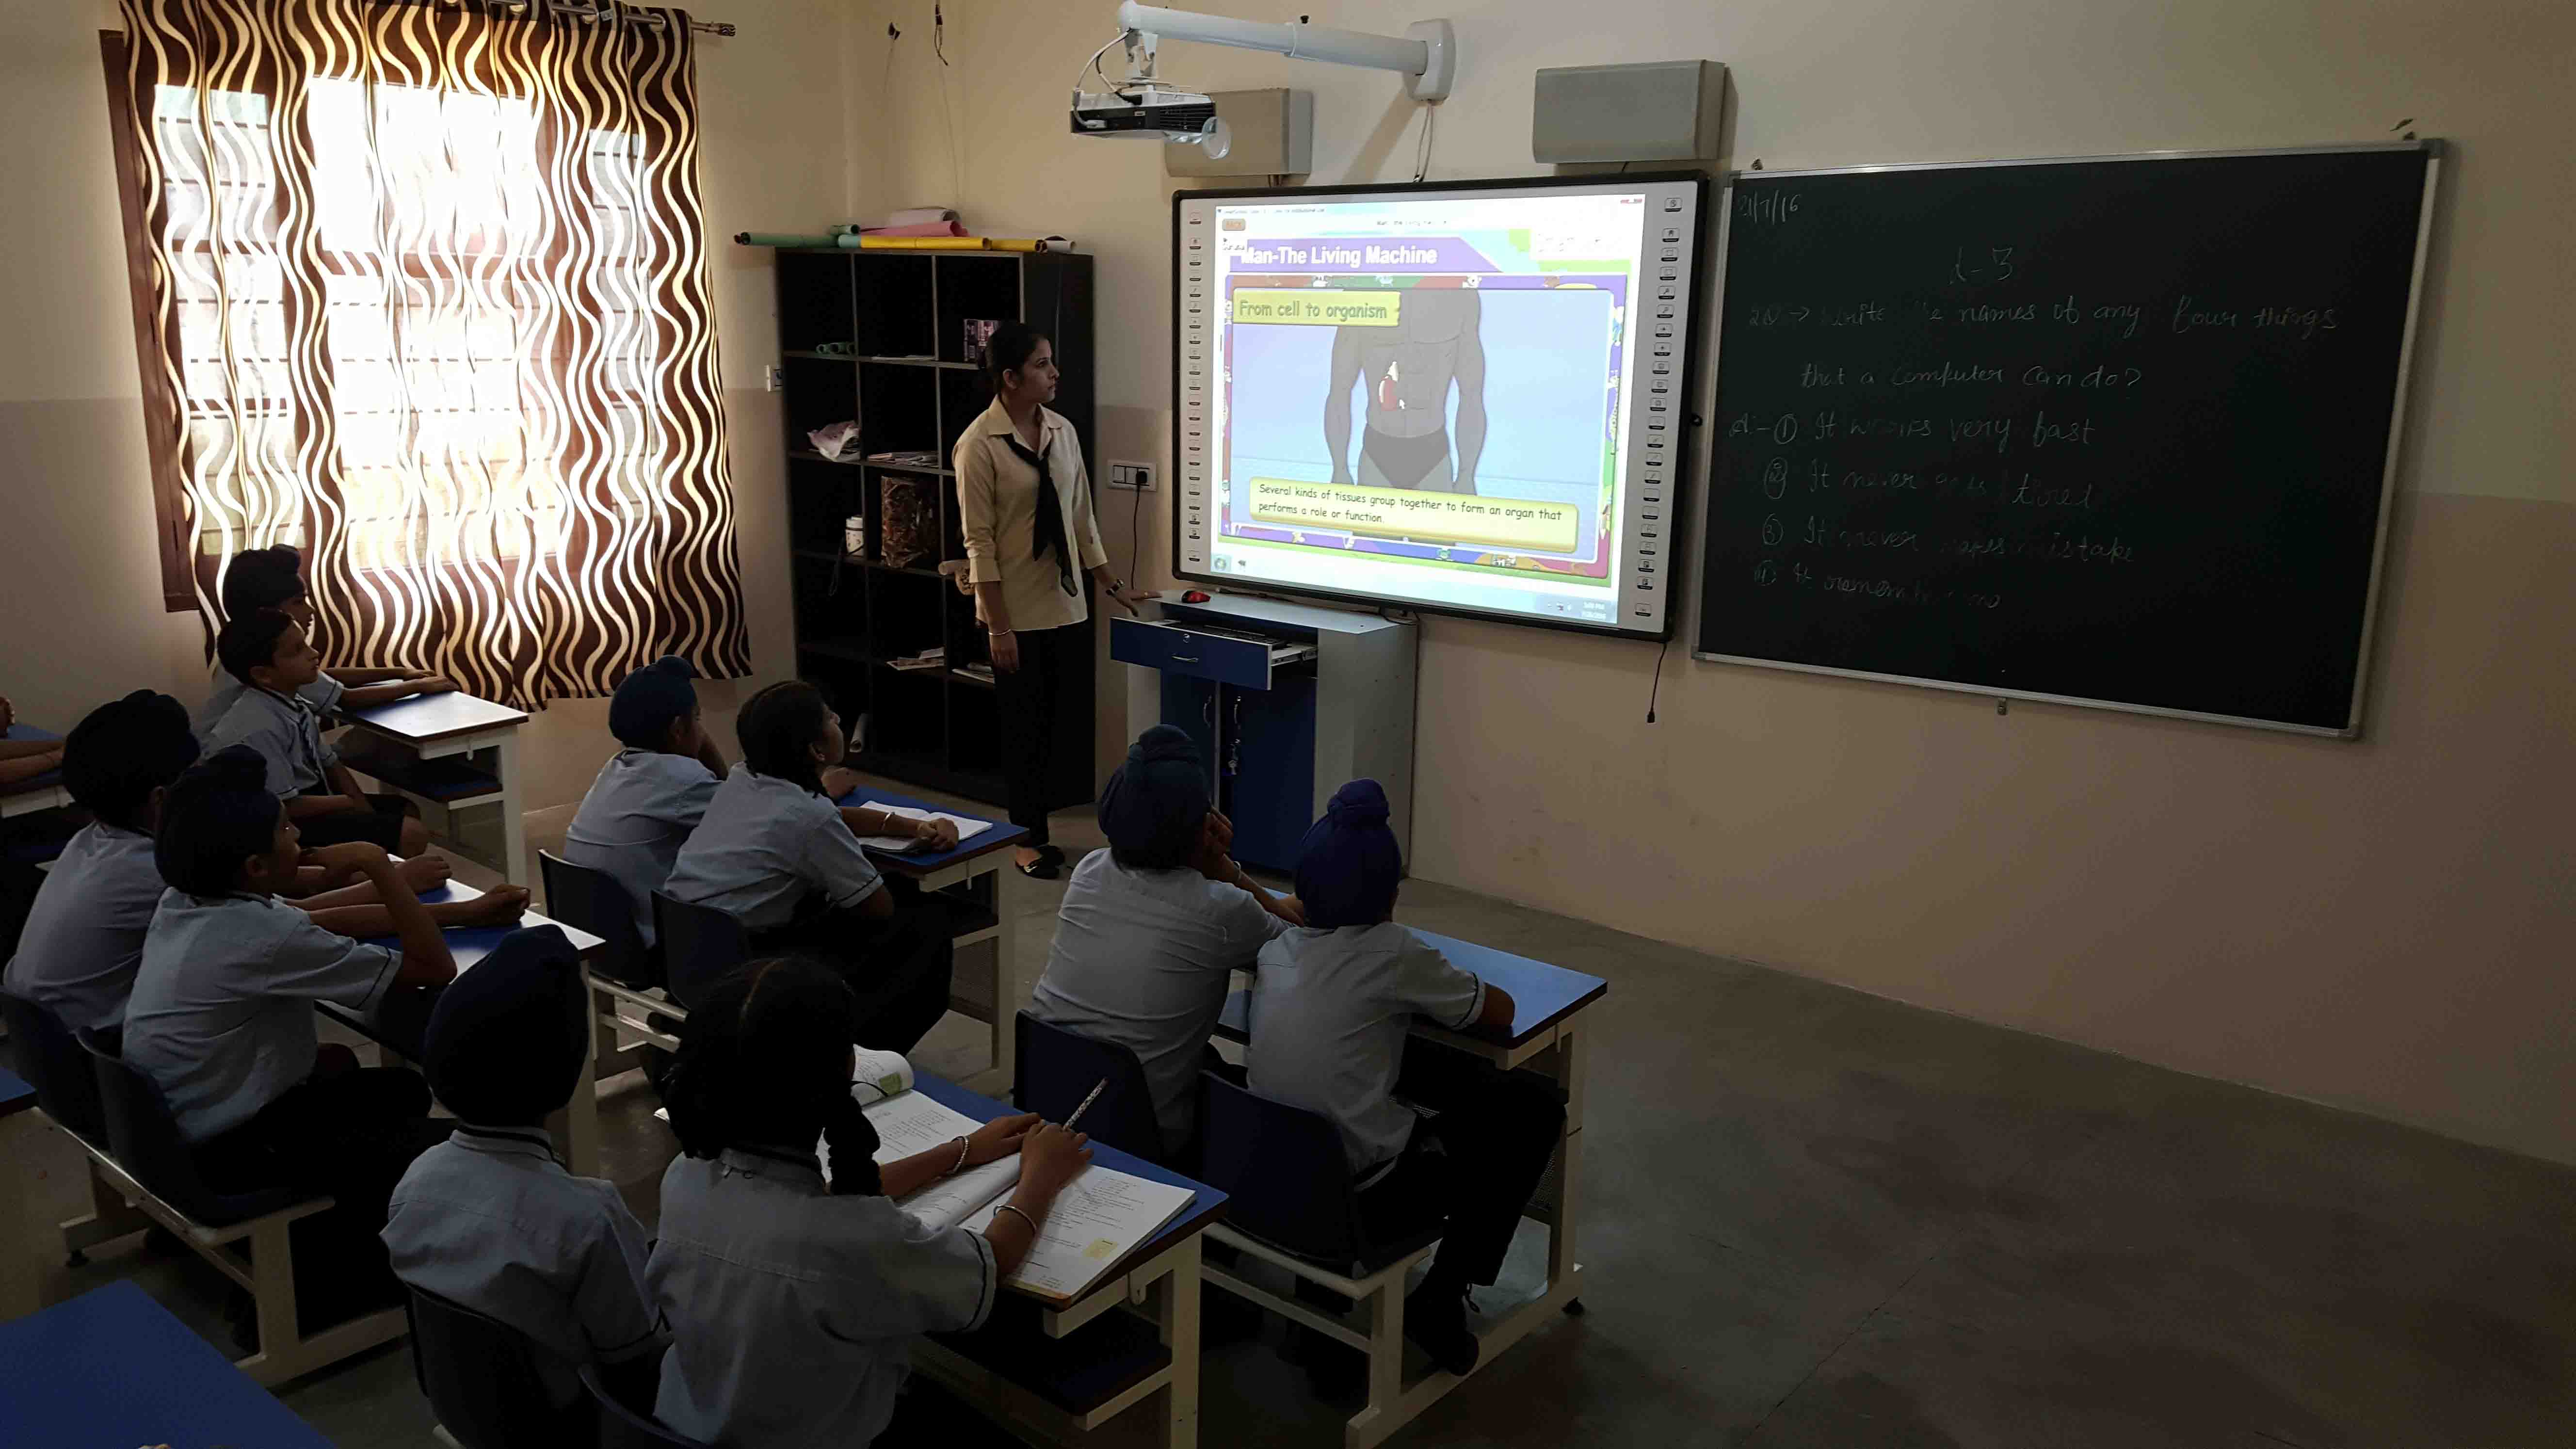 Digital Classroom